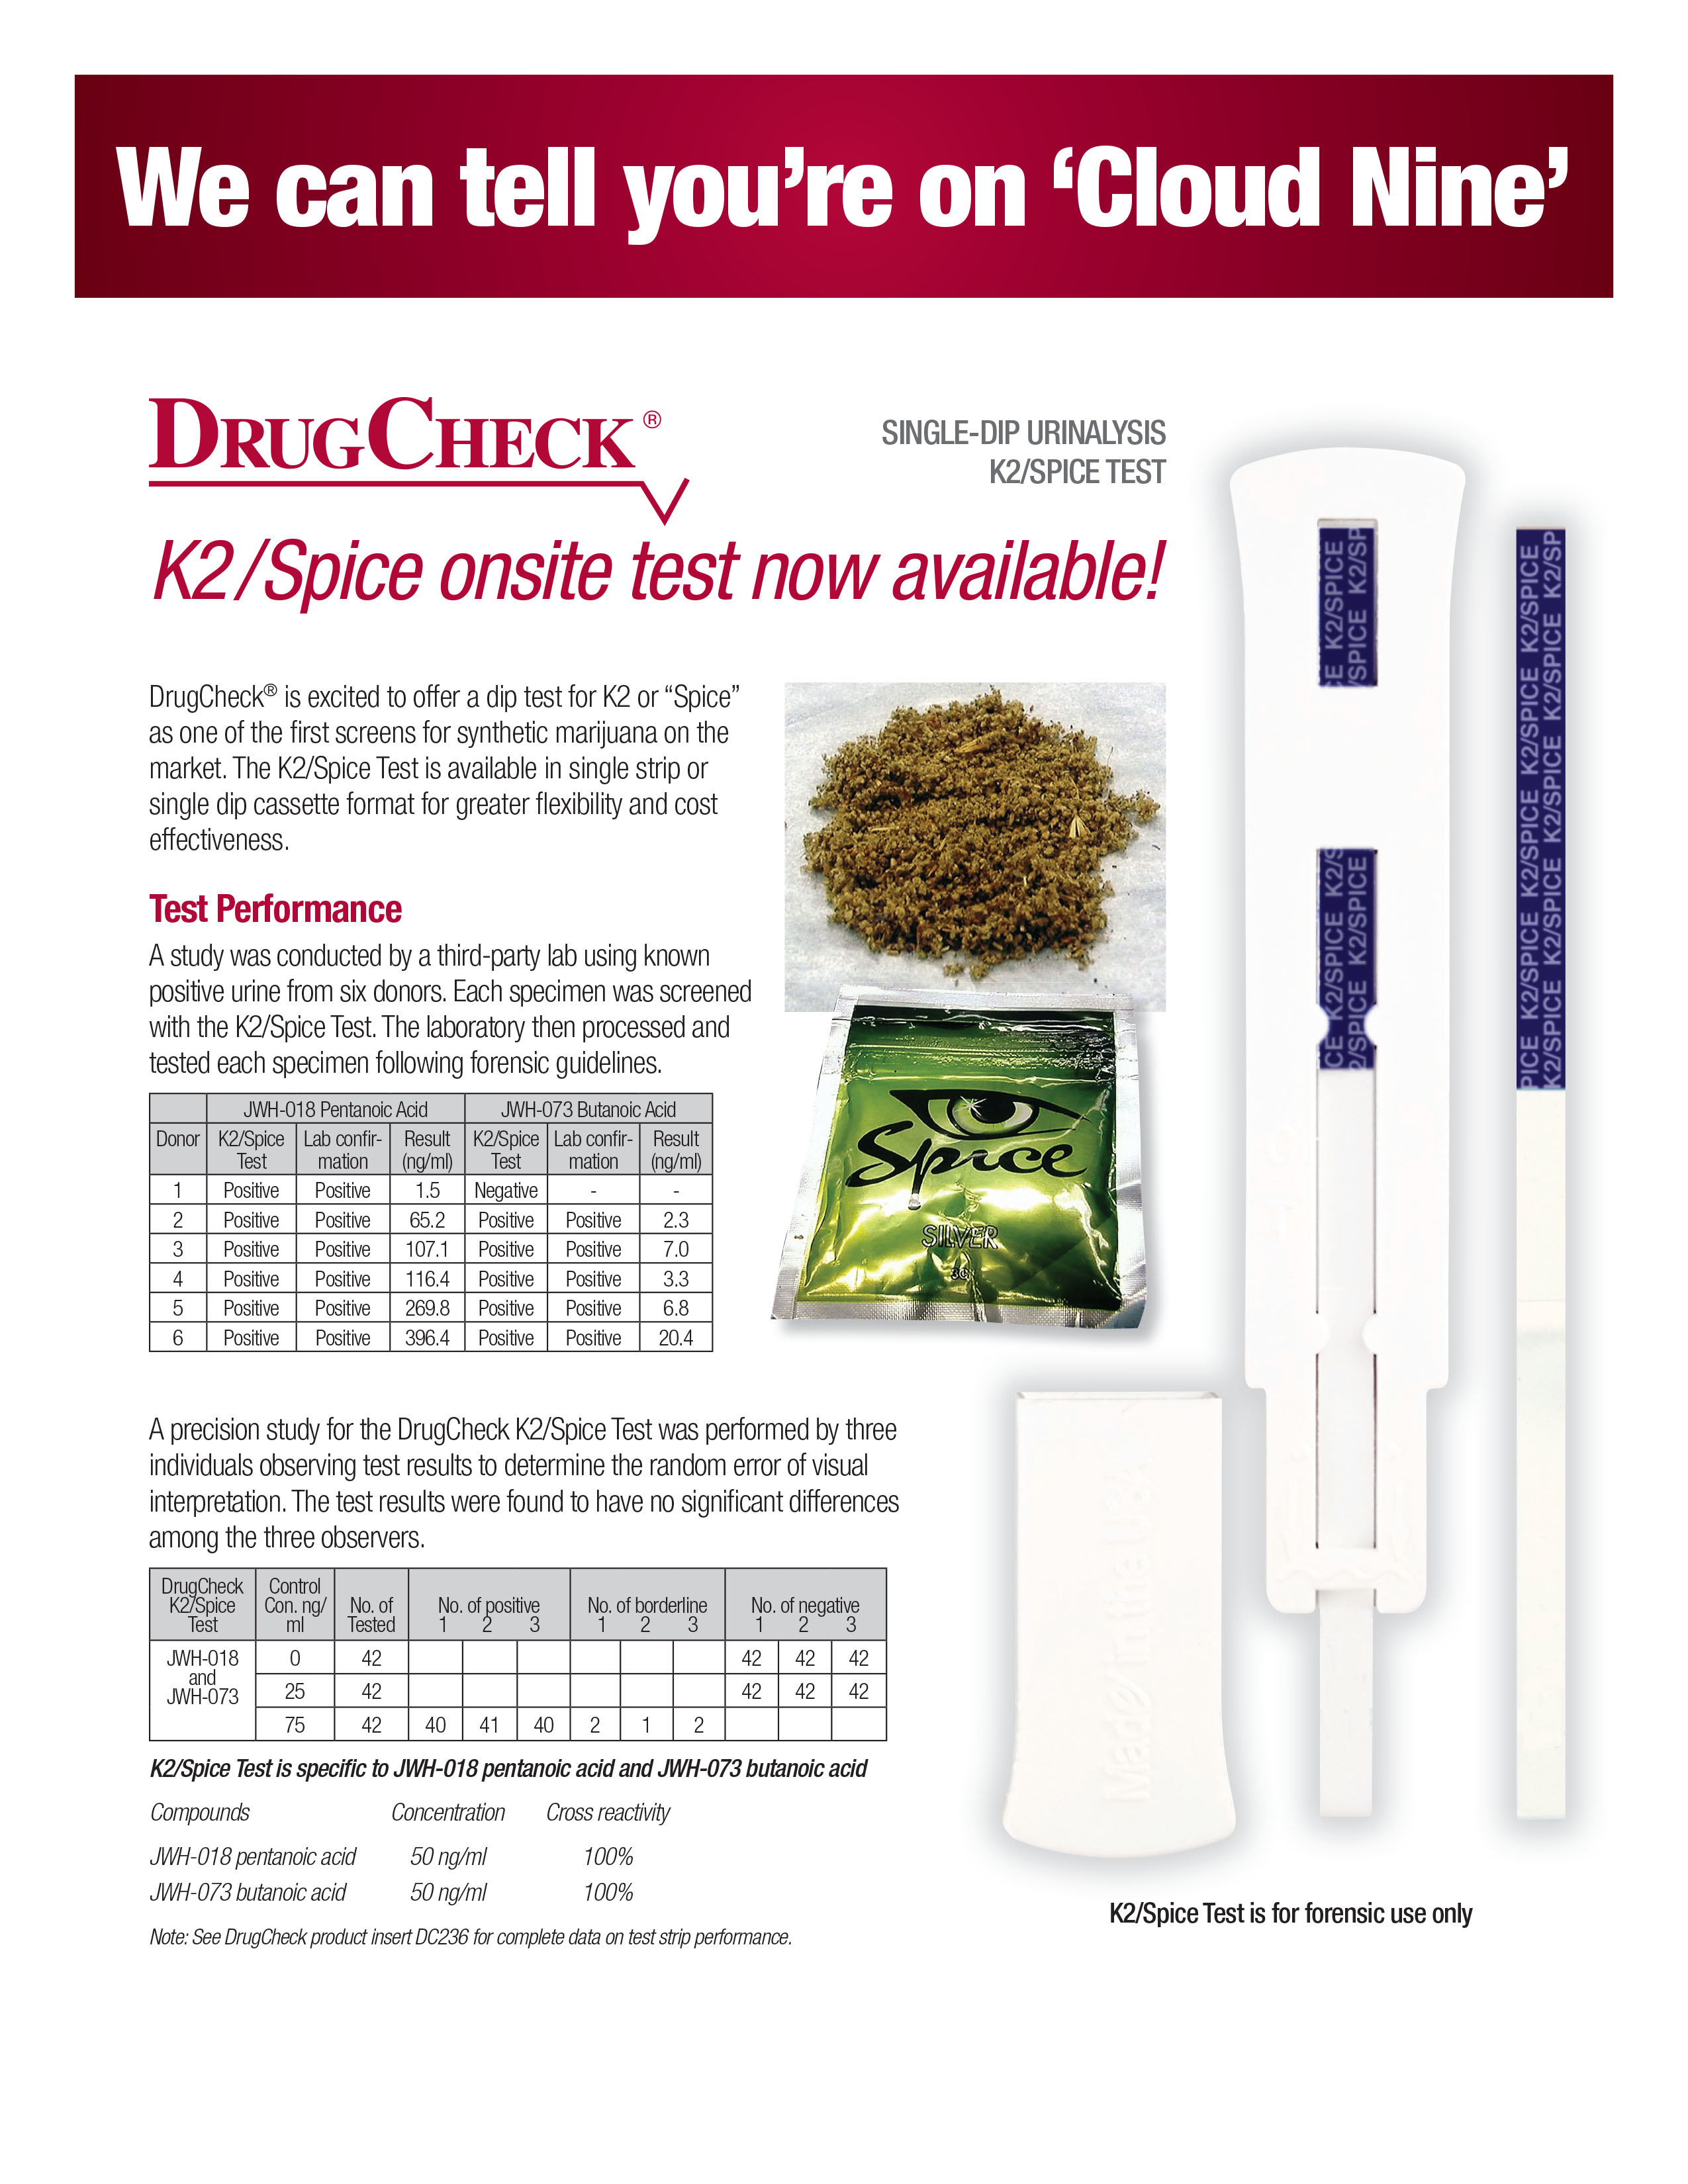 DrugCheck K2/Spice Test Product Specs (Page 1)